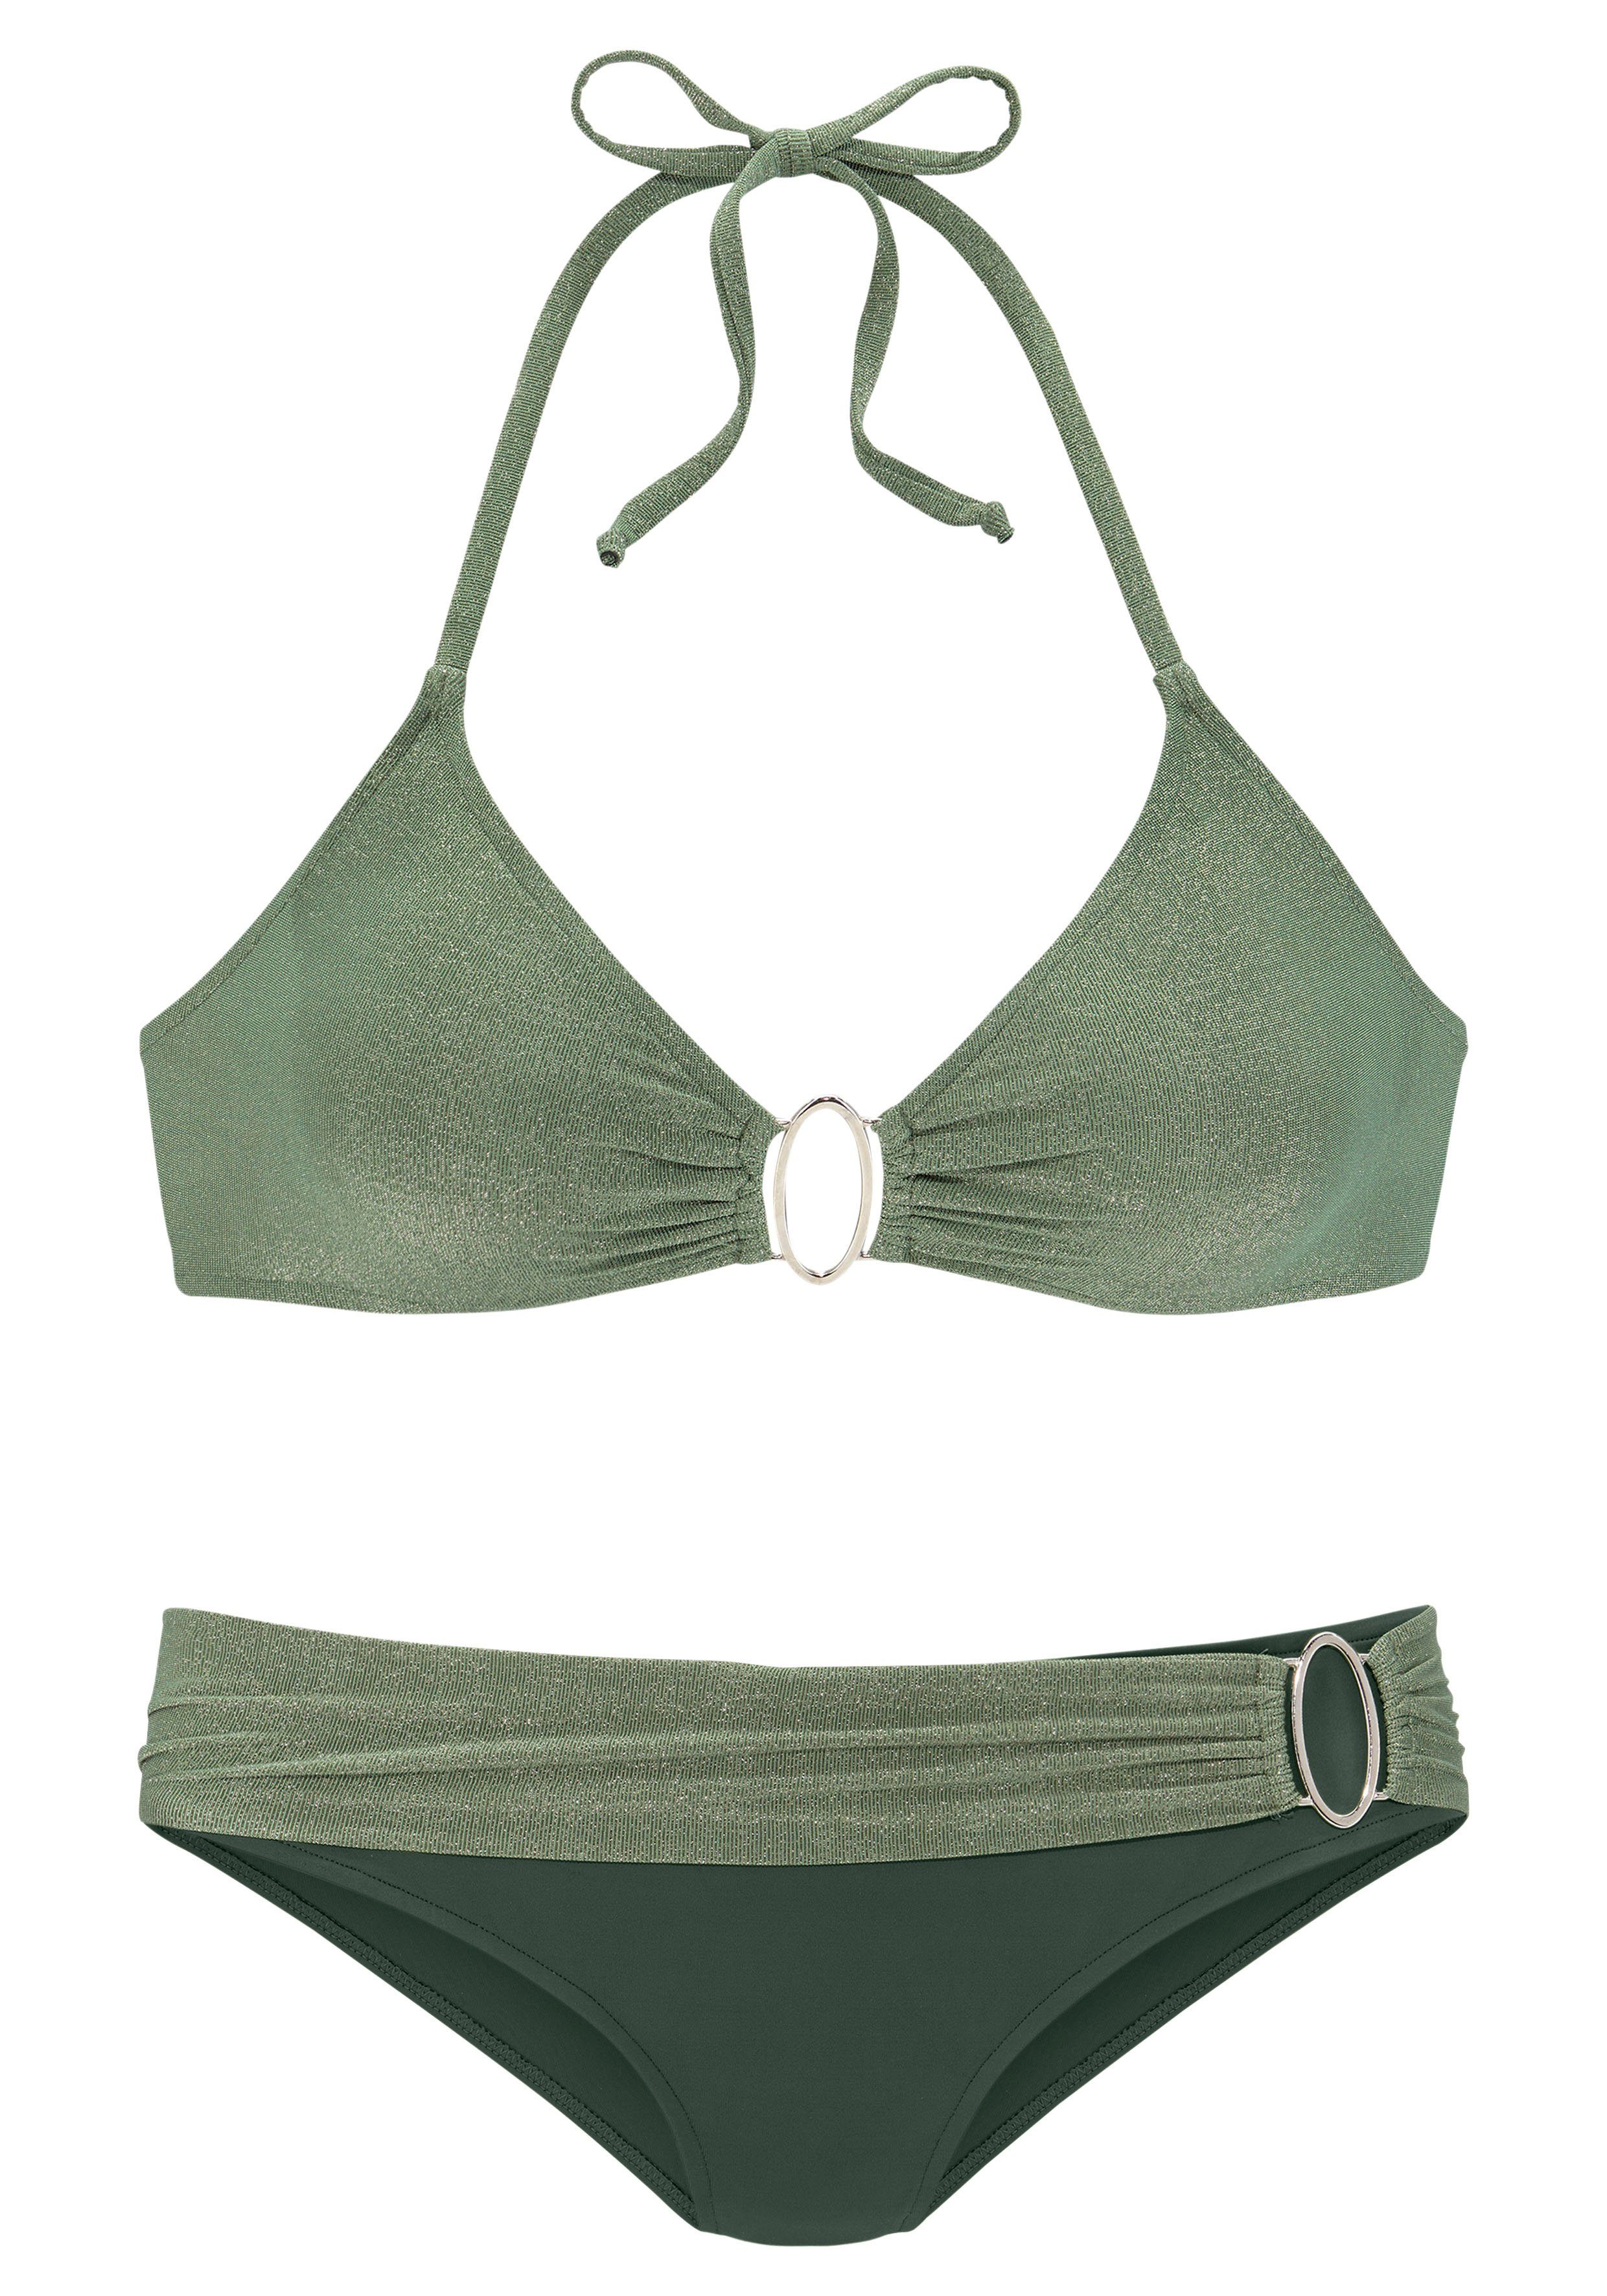 JETTE Triangel-Bikini oliv Zierringen mit edlen